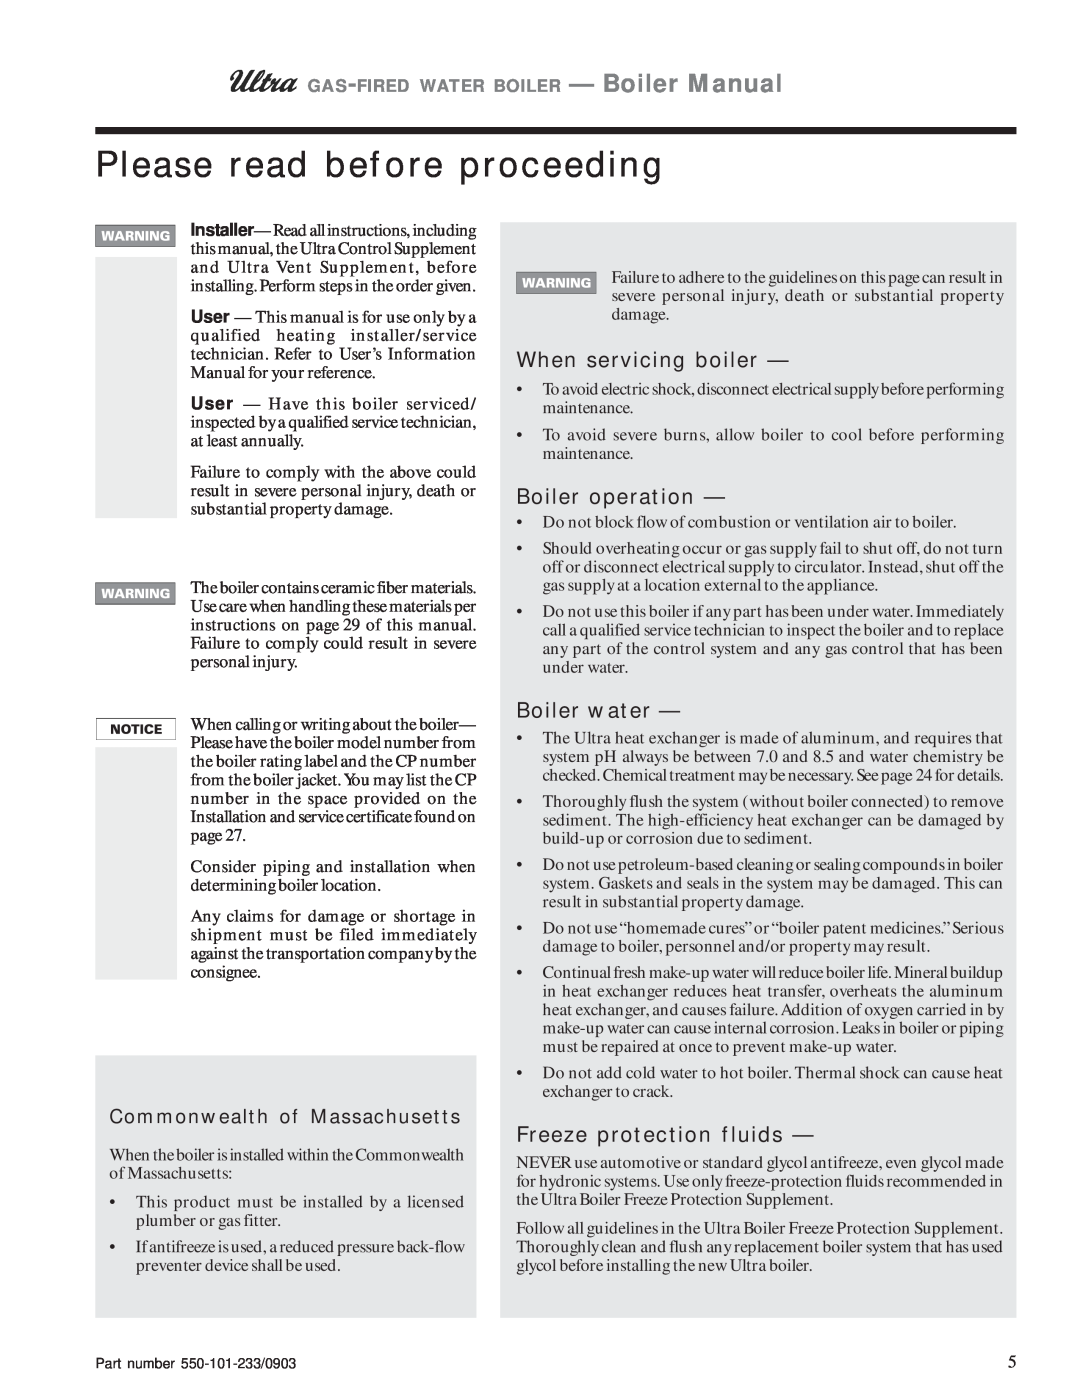 Weil-McLain 80, 230, 310, 105, 155 manual Please read before proceeding, When servicing boiler, Boiler operation, Boiler water 